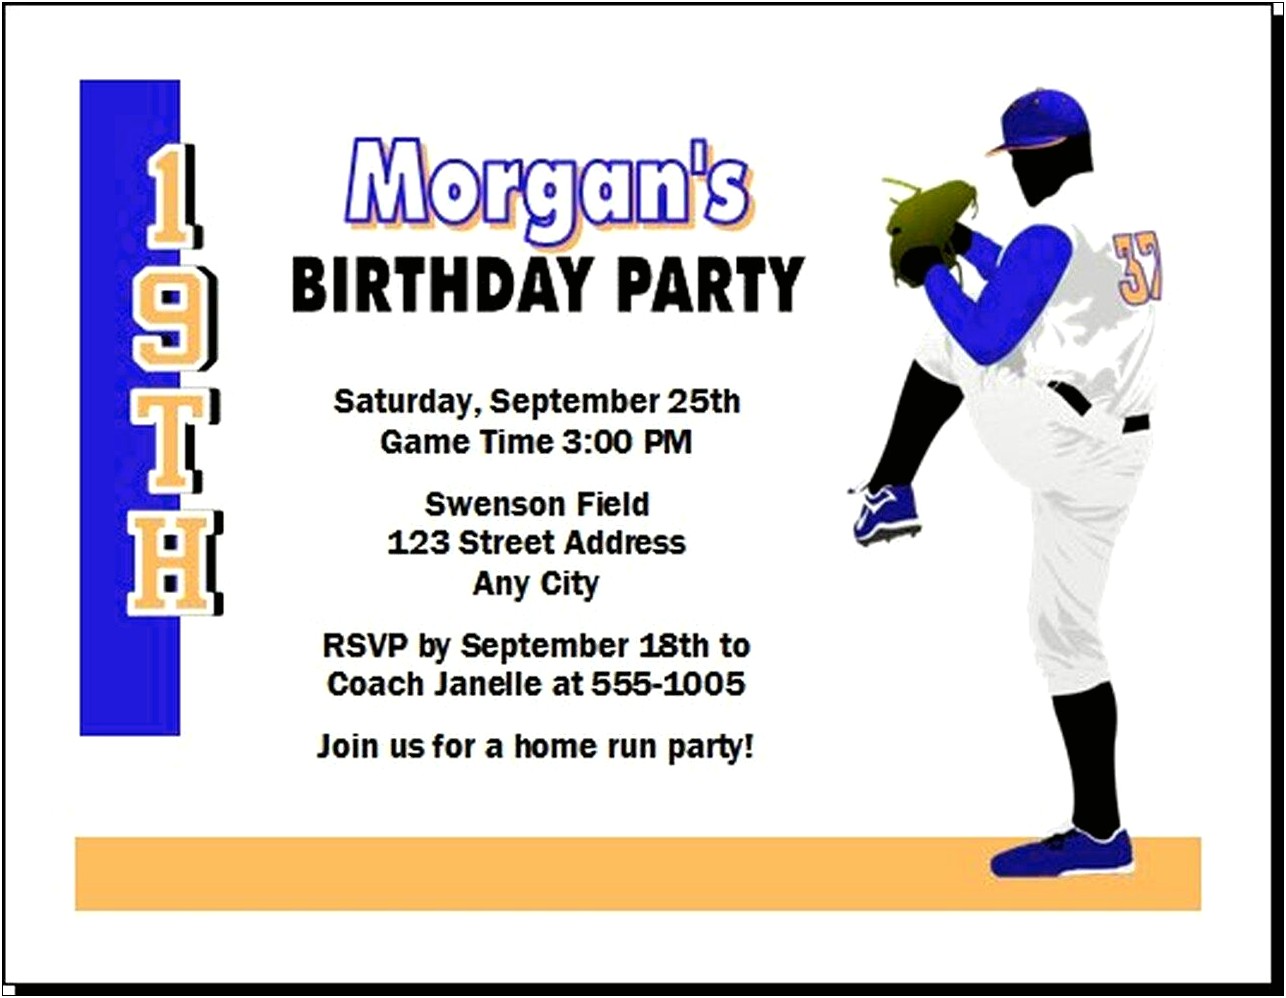 Free Baseball Birthday Party Invitation Template